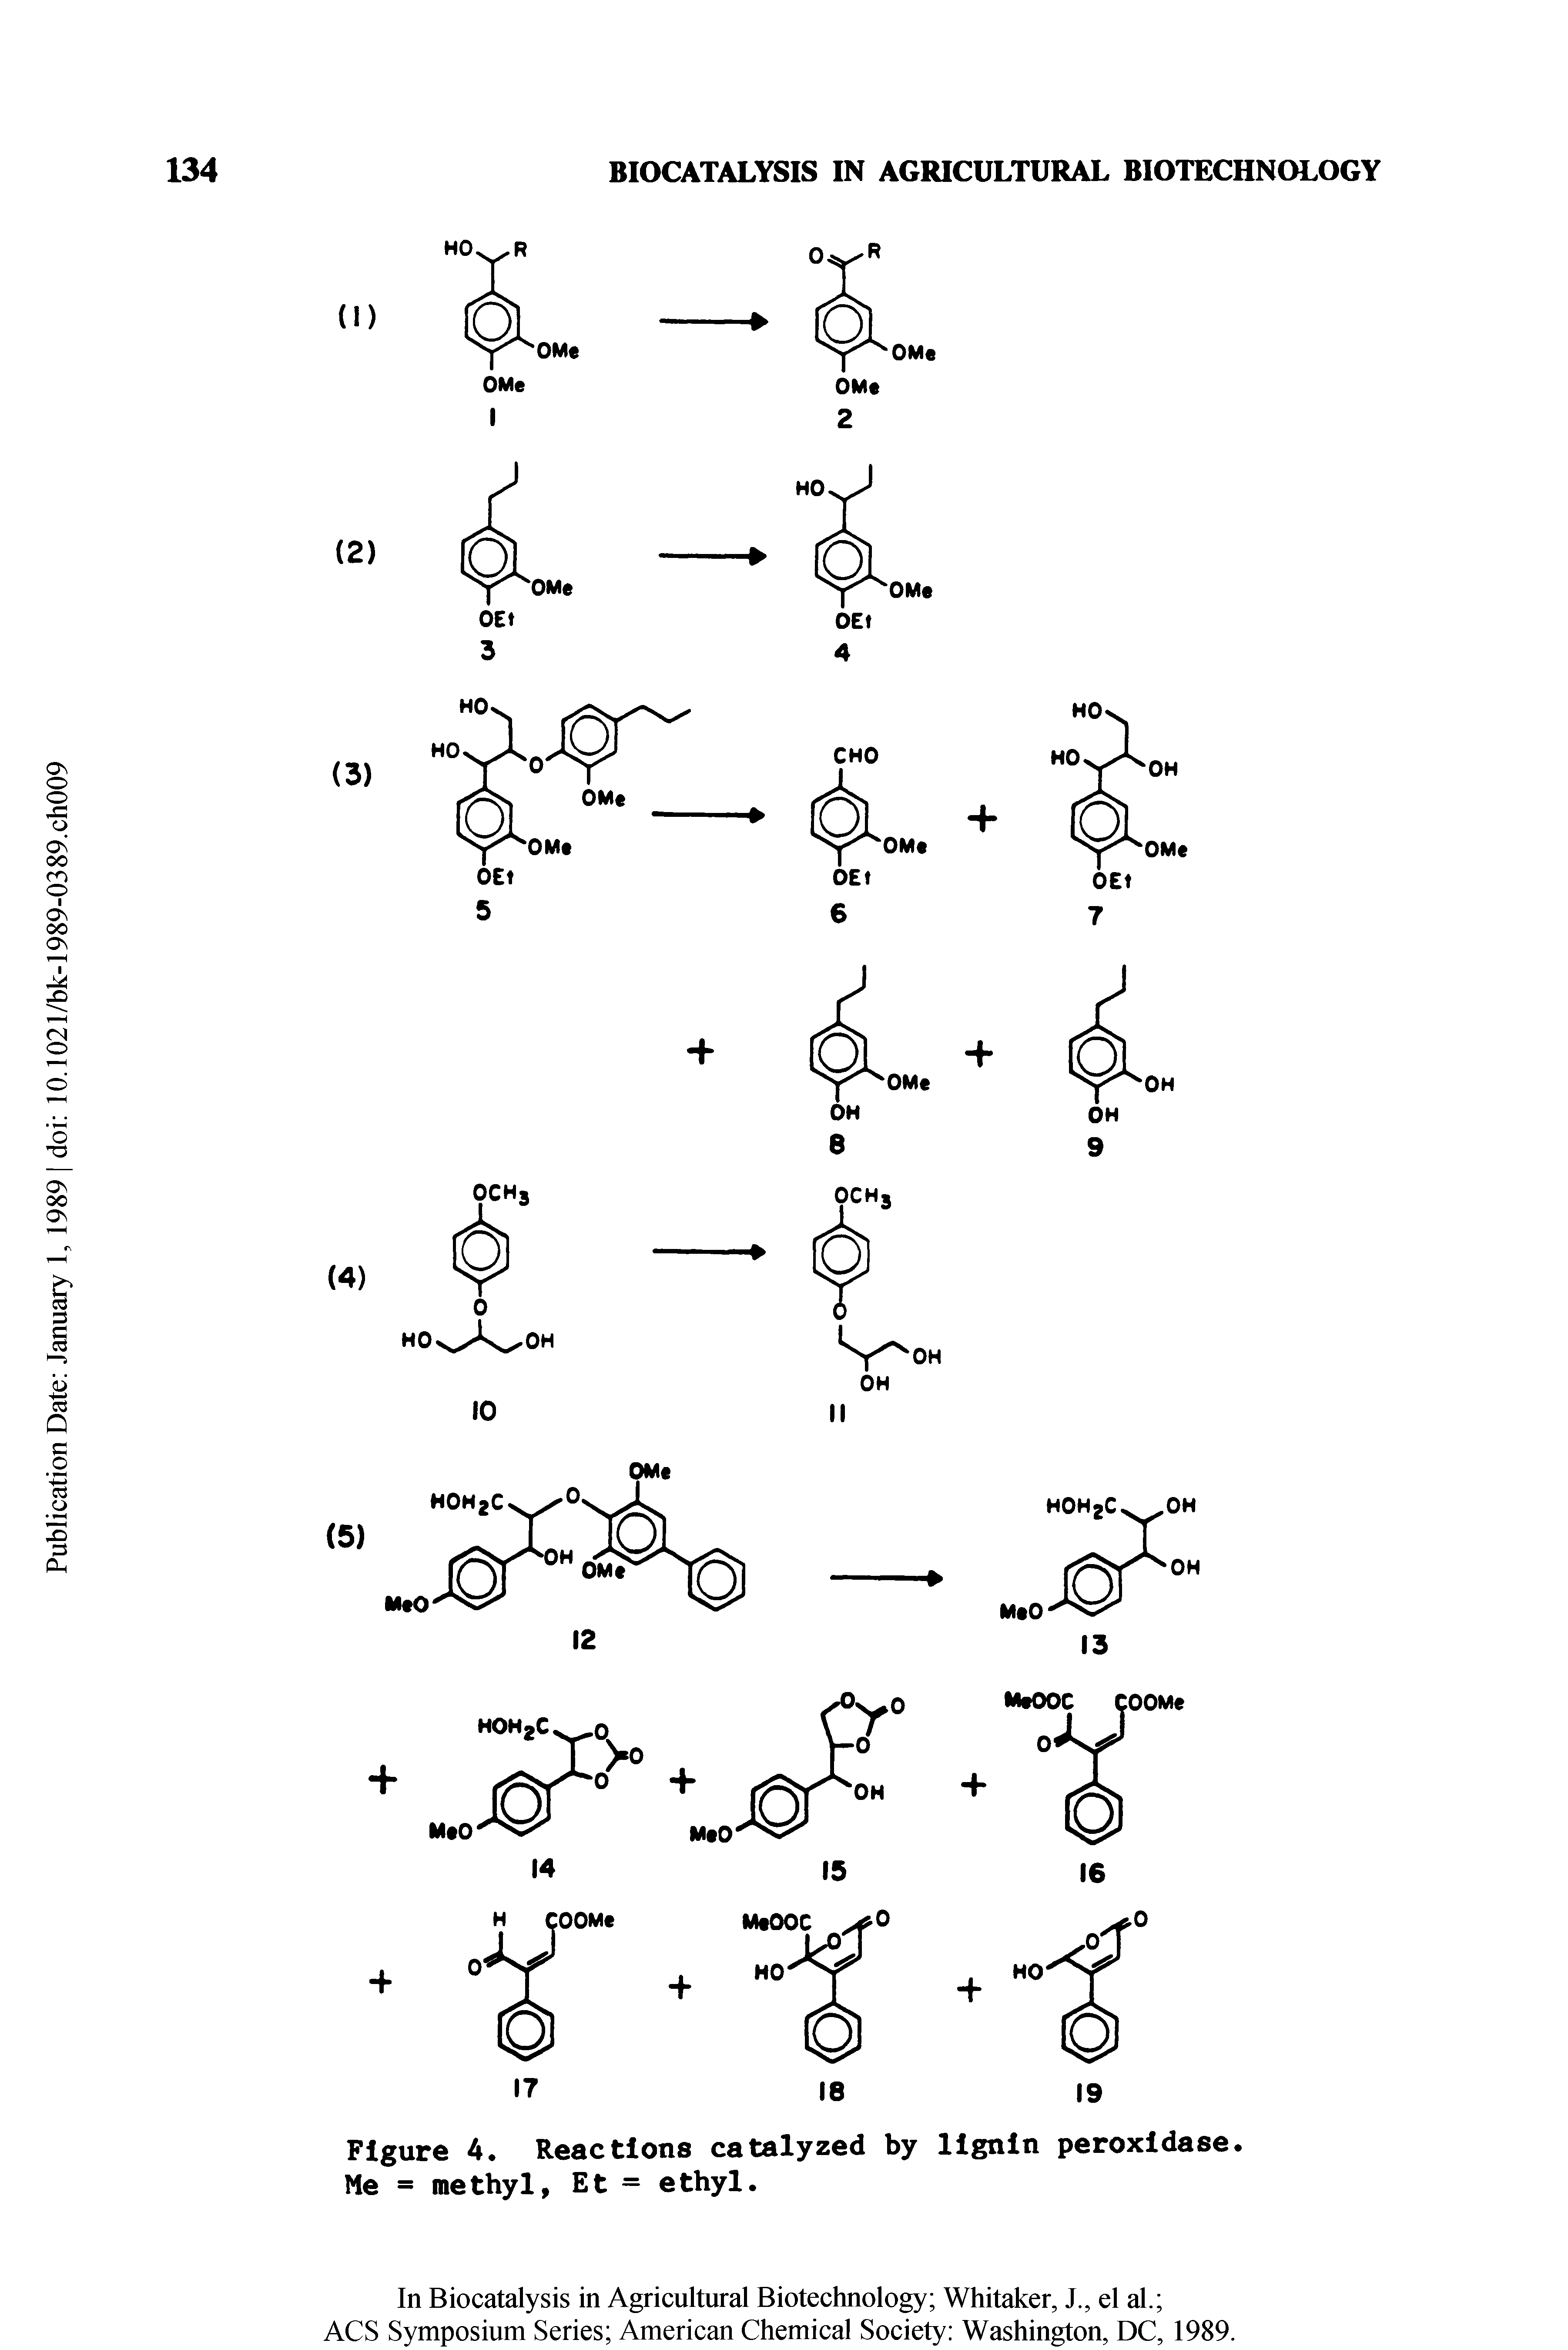 Figure 4. Reactions catalyzed by lignin peroxidase. Me = methyl, Et = ethyl.